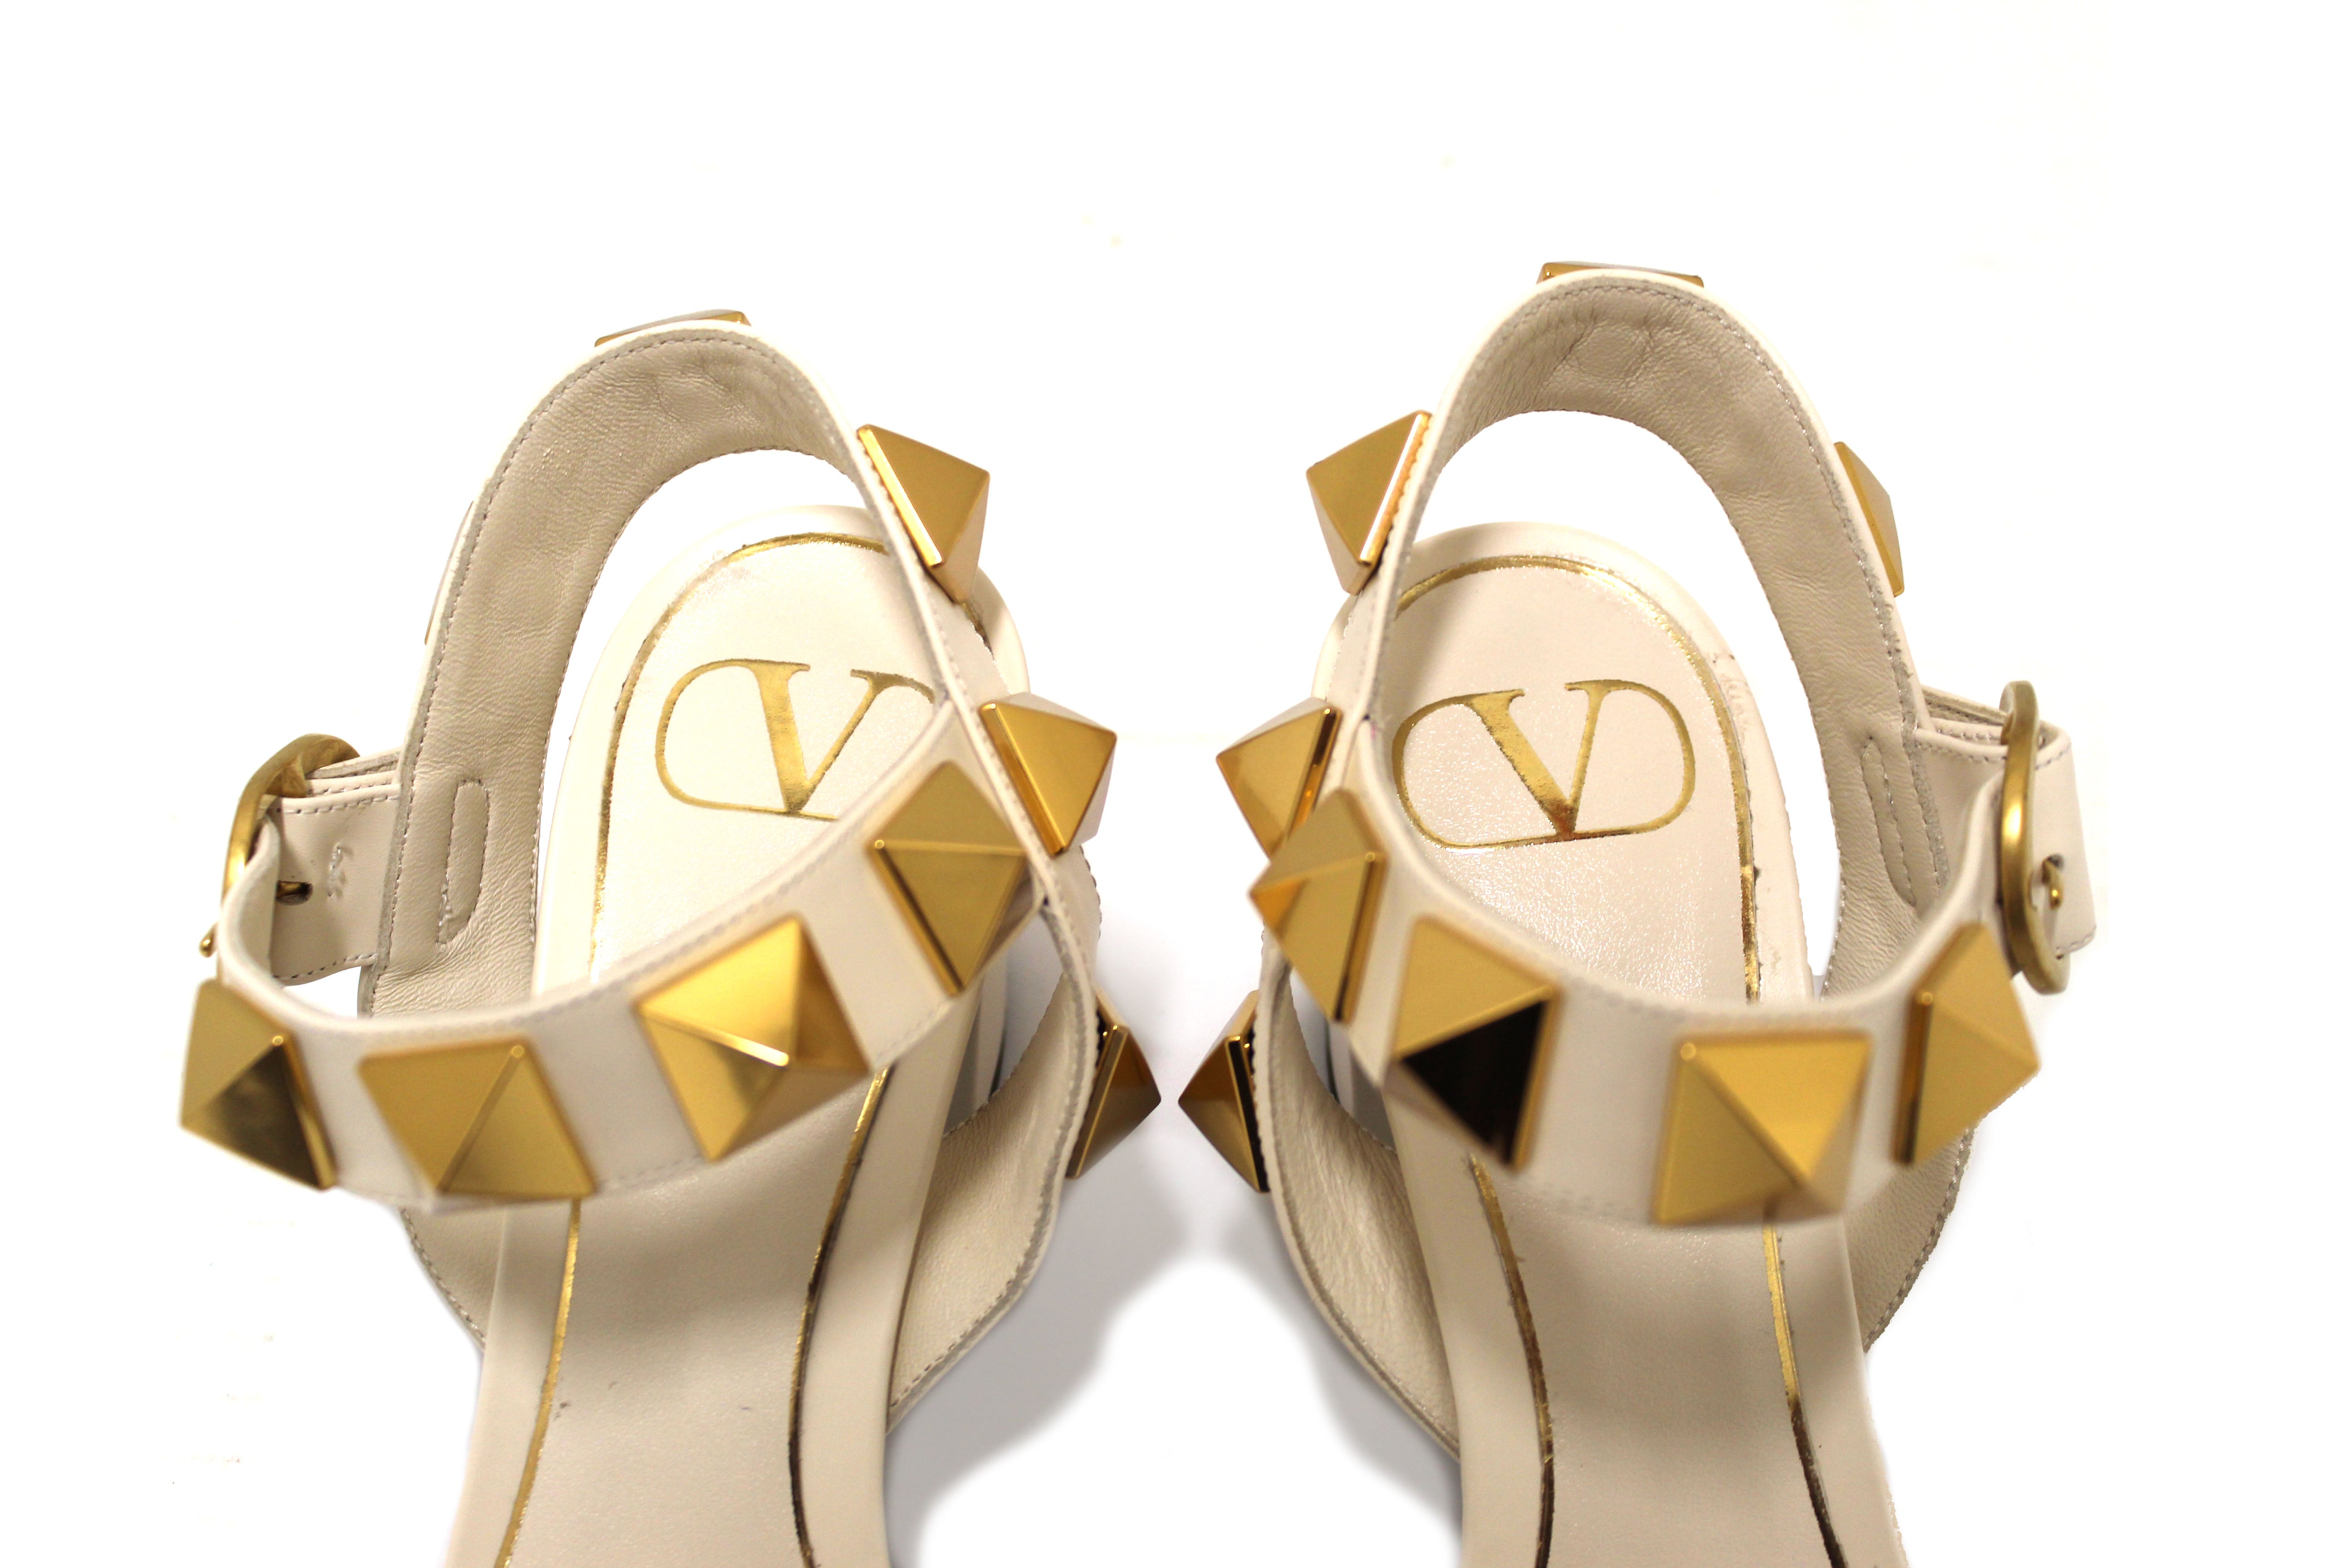 Authentic NEW Valentino Garavani White Leather Roman Stud Ankle-Strap Sandals Size 38.5